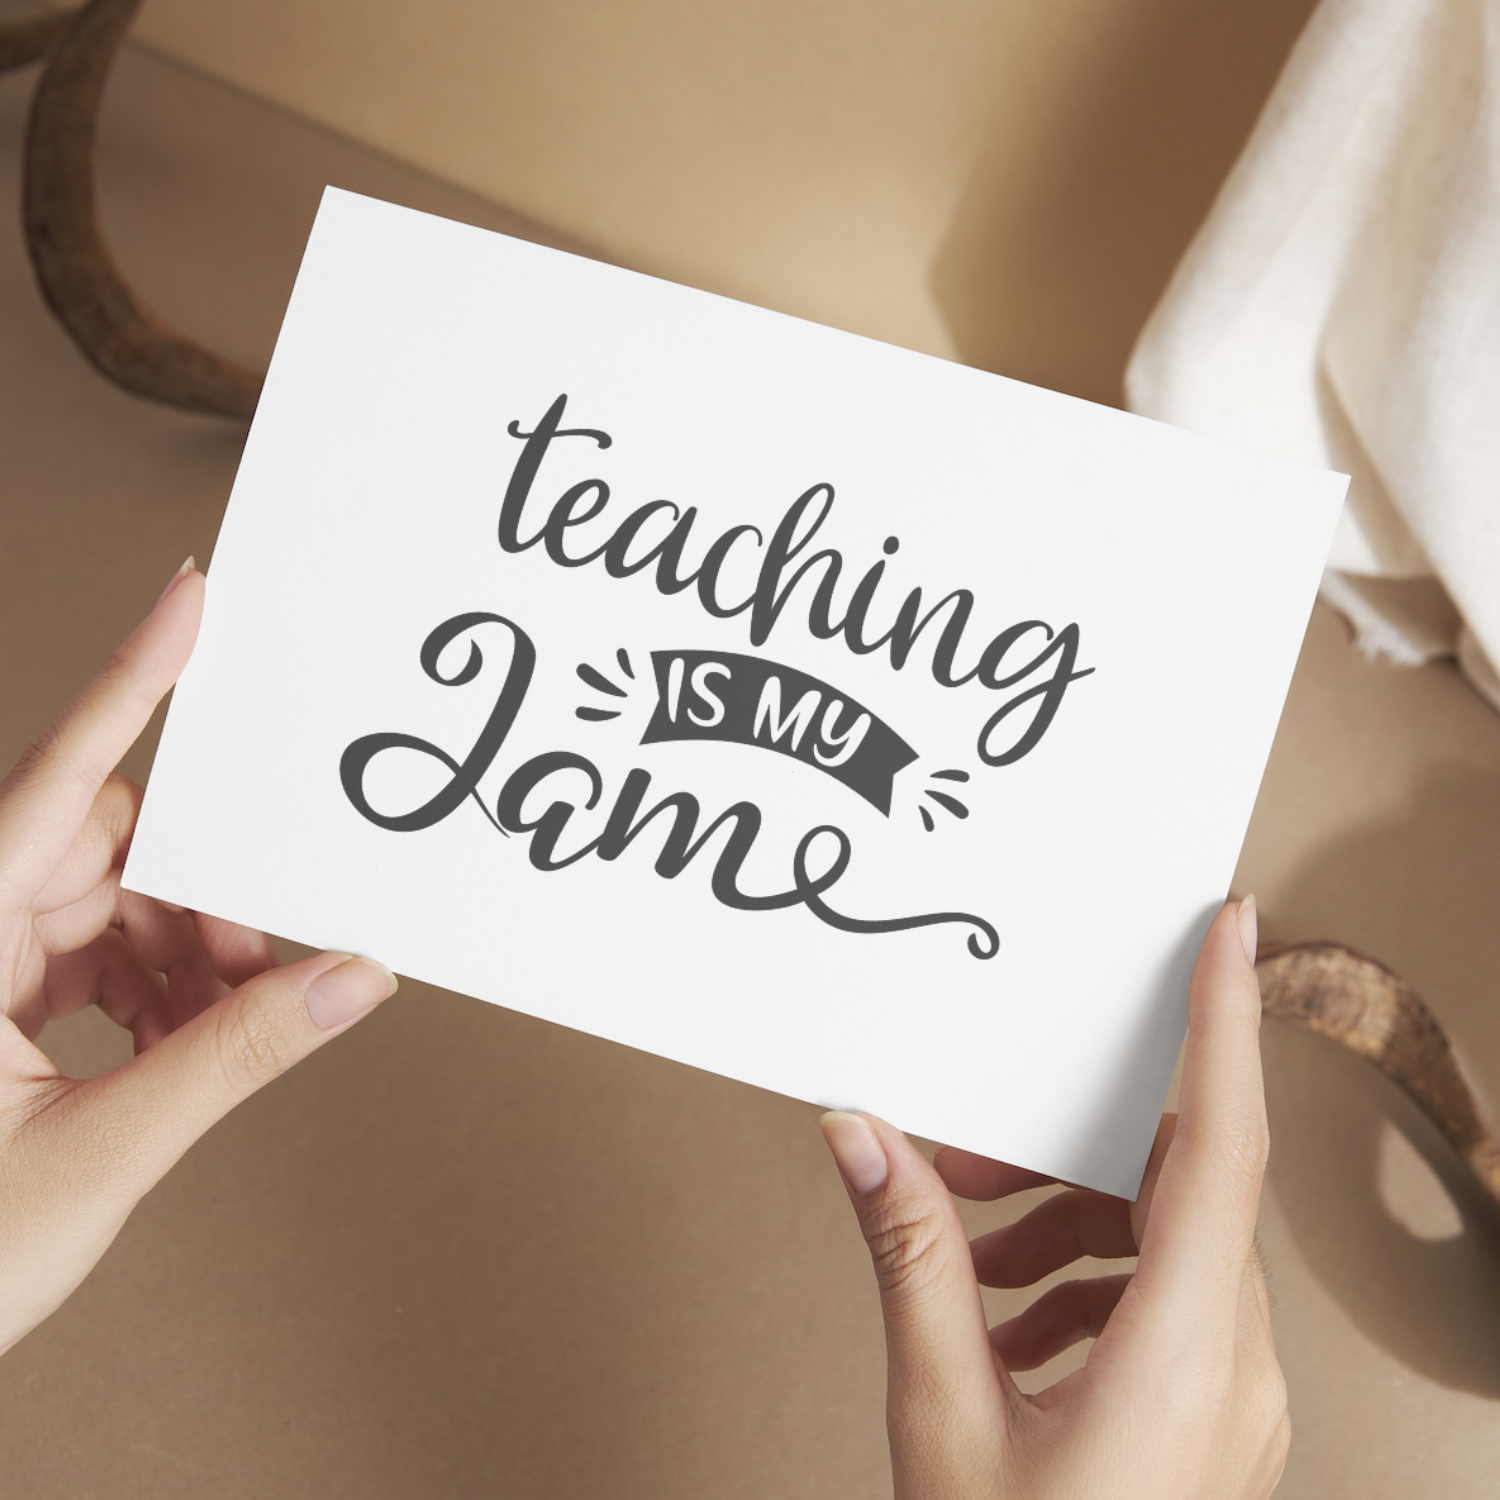 Teaching is myJam SVG | Digital Download | Cut File | SVG - Only The Sweet Stuff